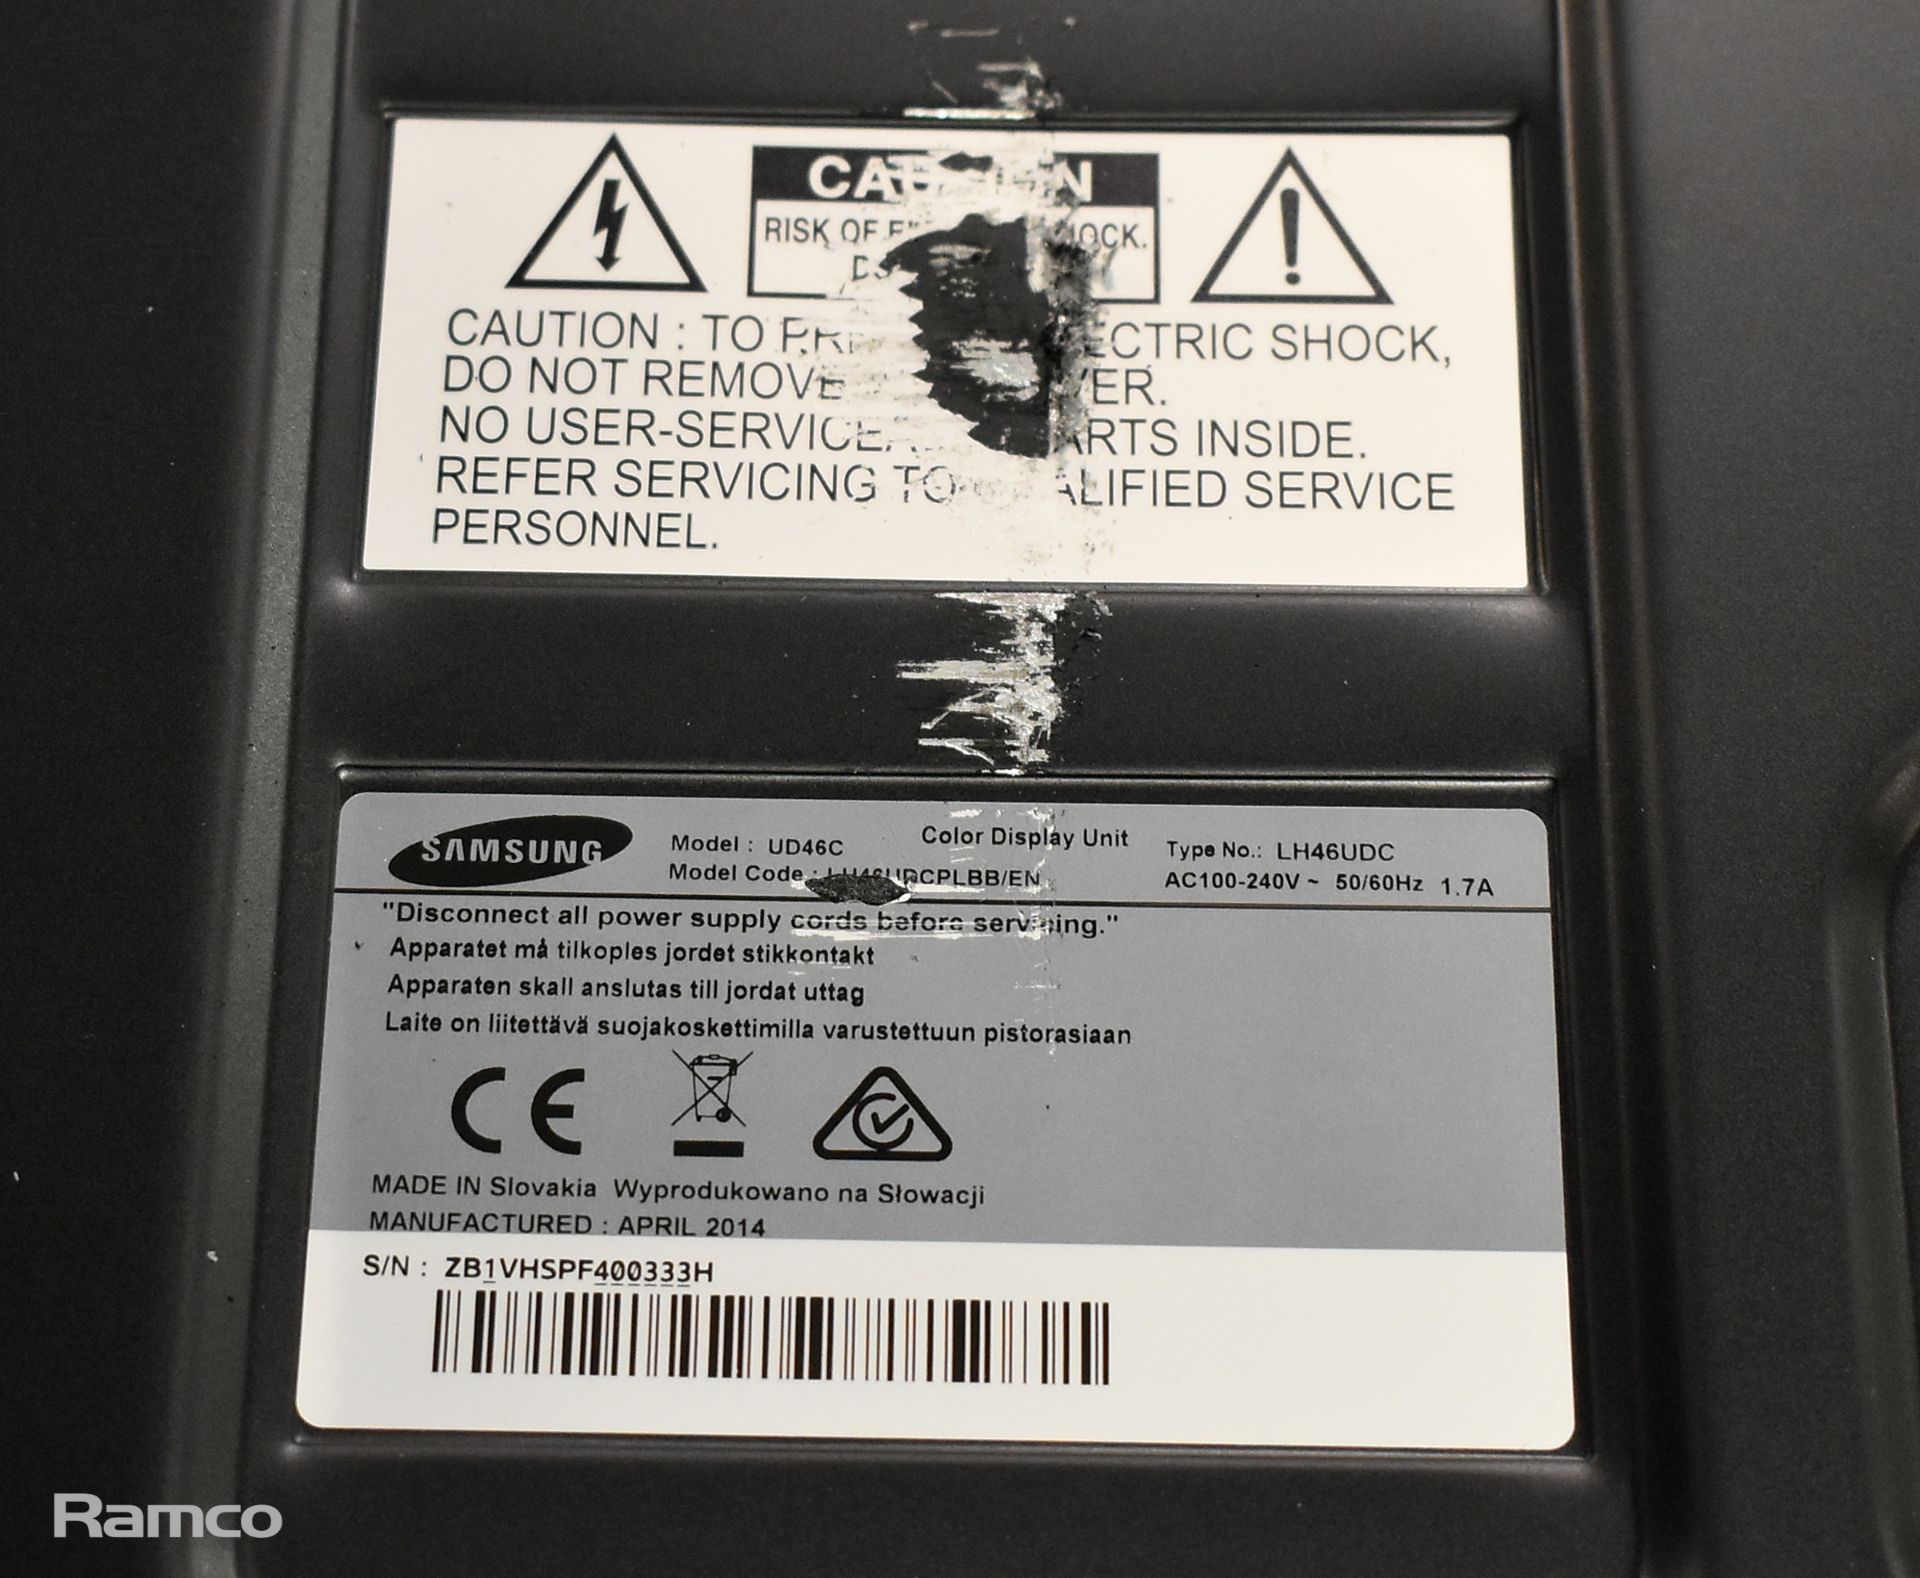 Samsung UD46C 46 inch LED backlit LCD display, Samsung UD46C 46 inch LED backlit LCD display - Image 7 of 8